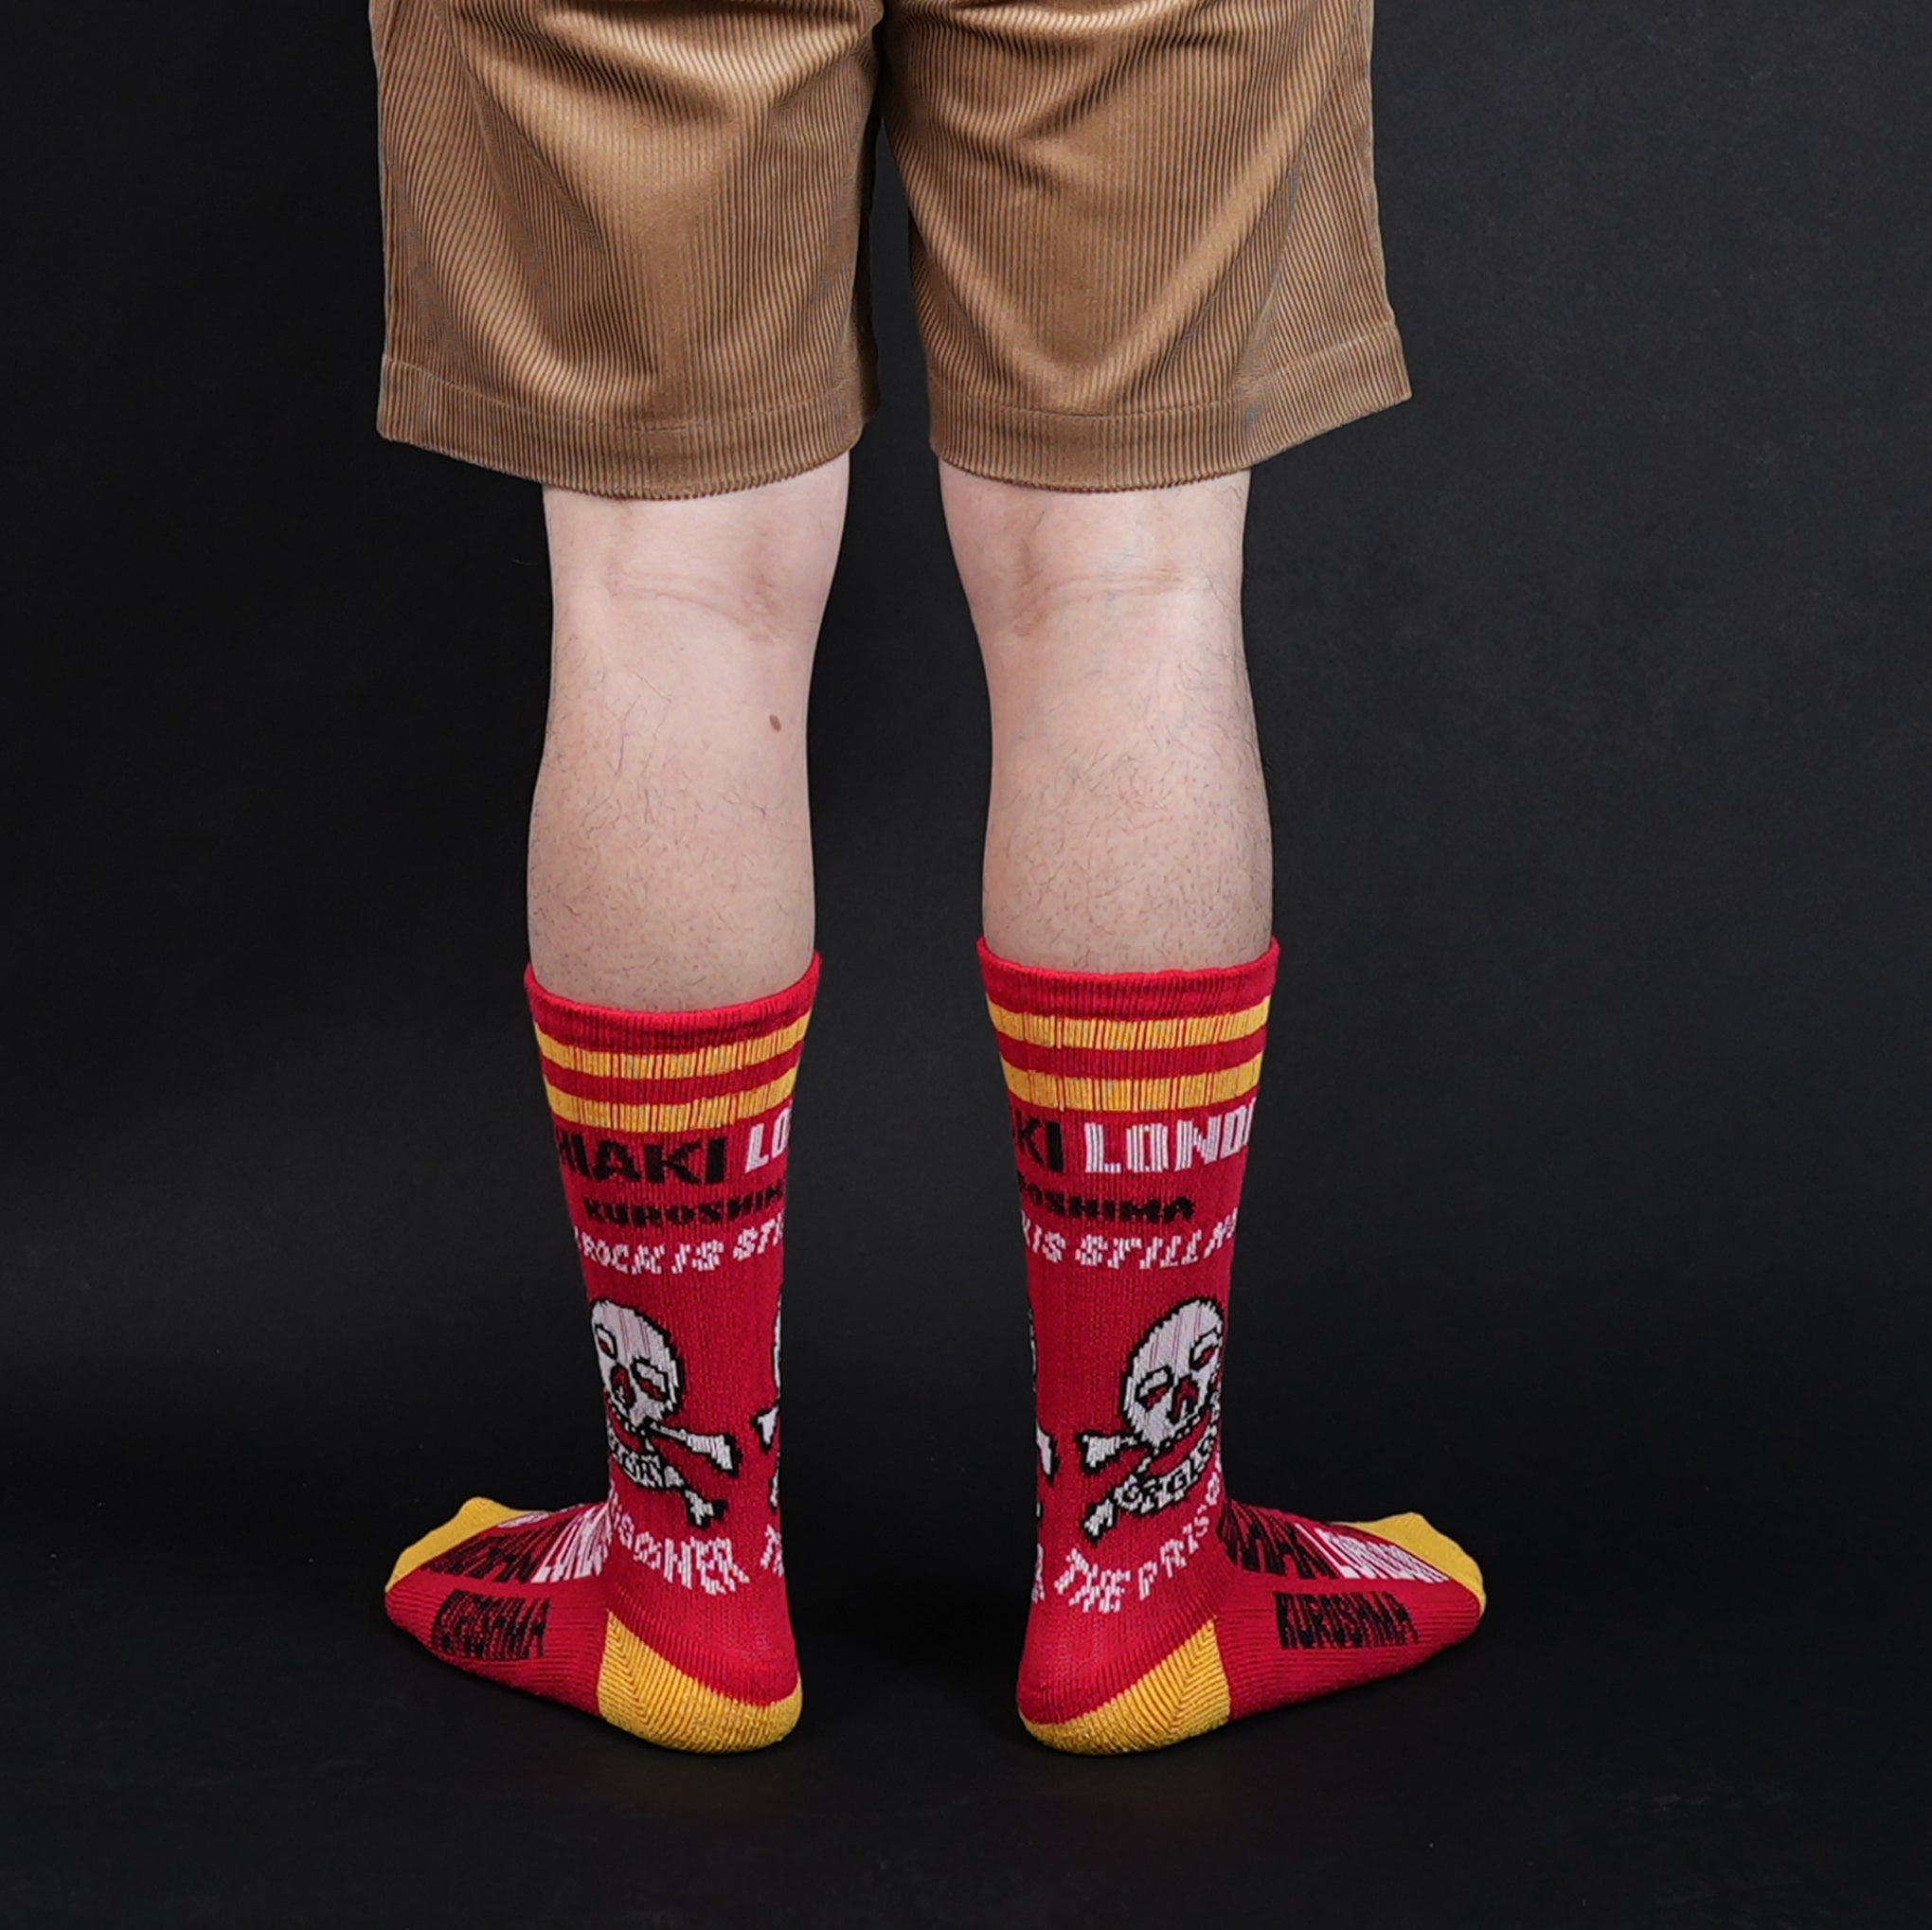 Name:Rock The Socks |  Color:Red【BILLY BUDDUSKY_ビリーバダスキー】【ネコポス選択可能】